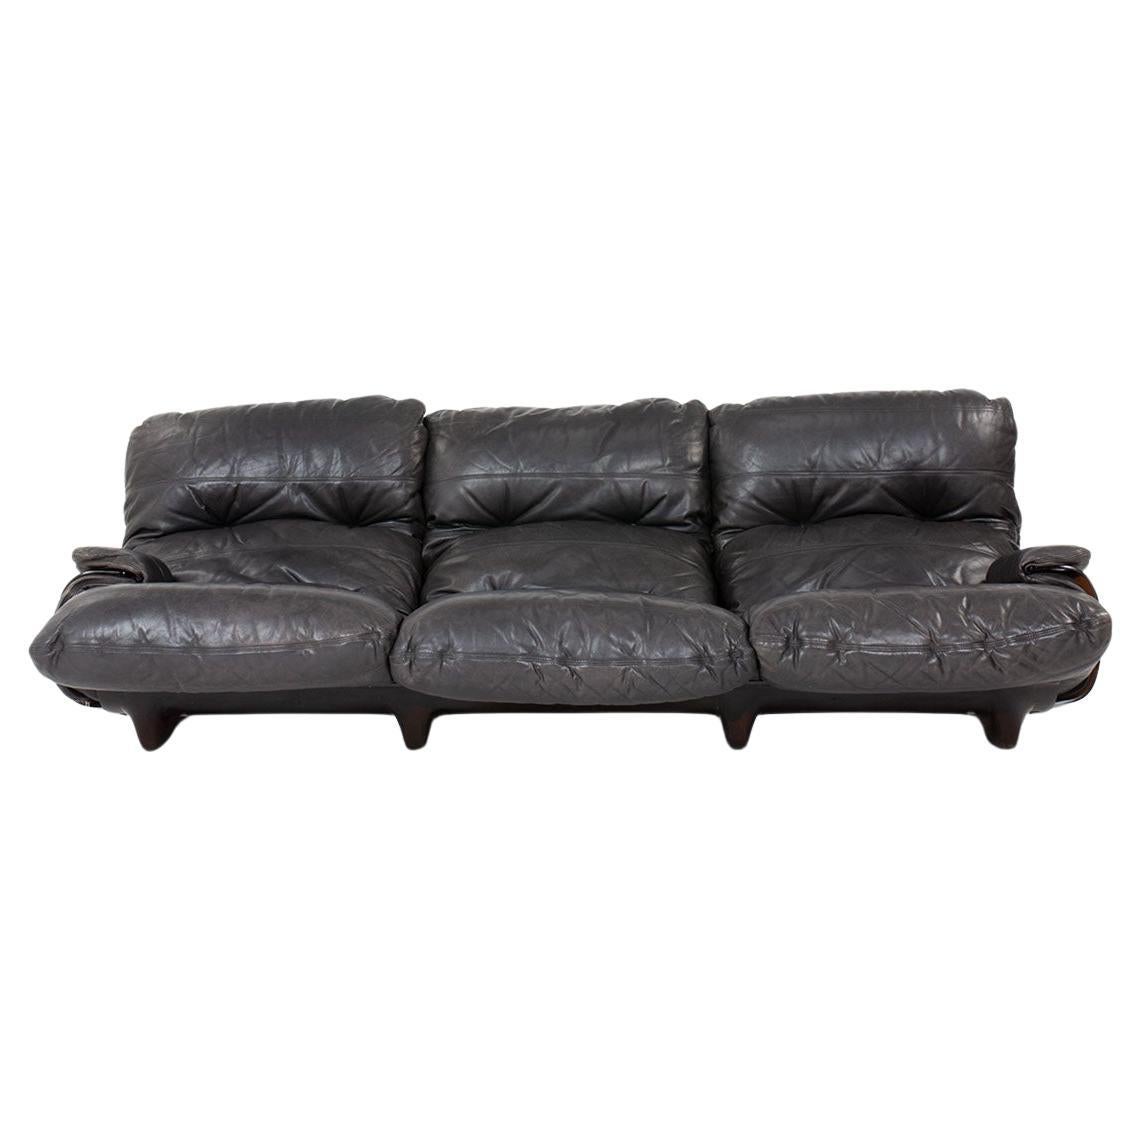 Marsala 3-seat sofa black leather by Michel Ducaroy for Ligne Roset 1970